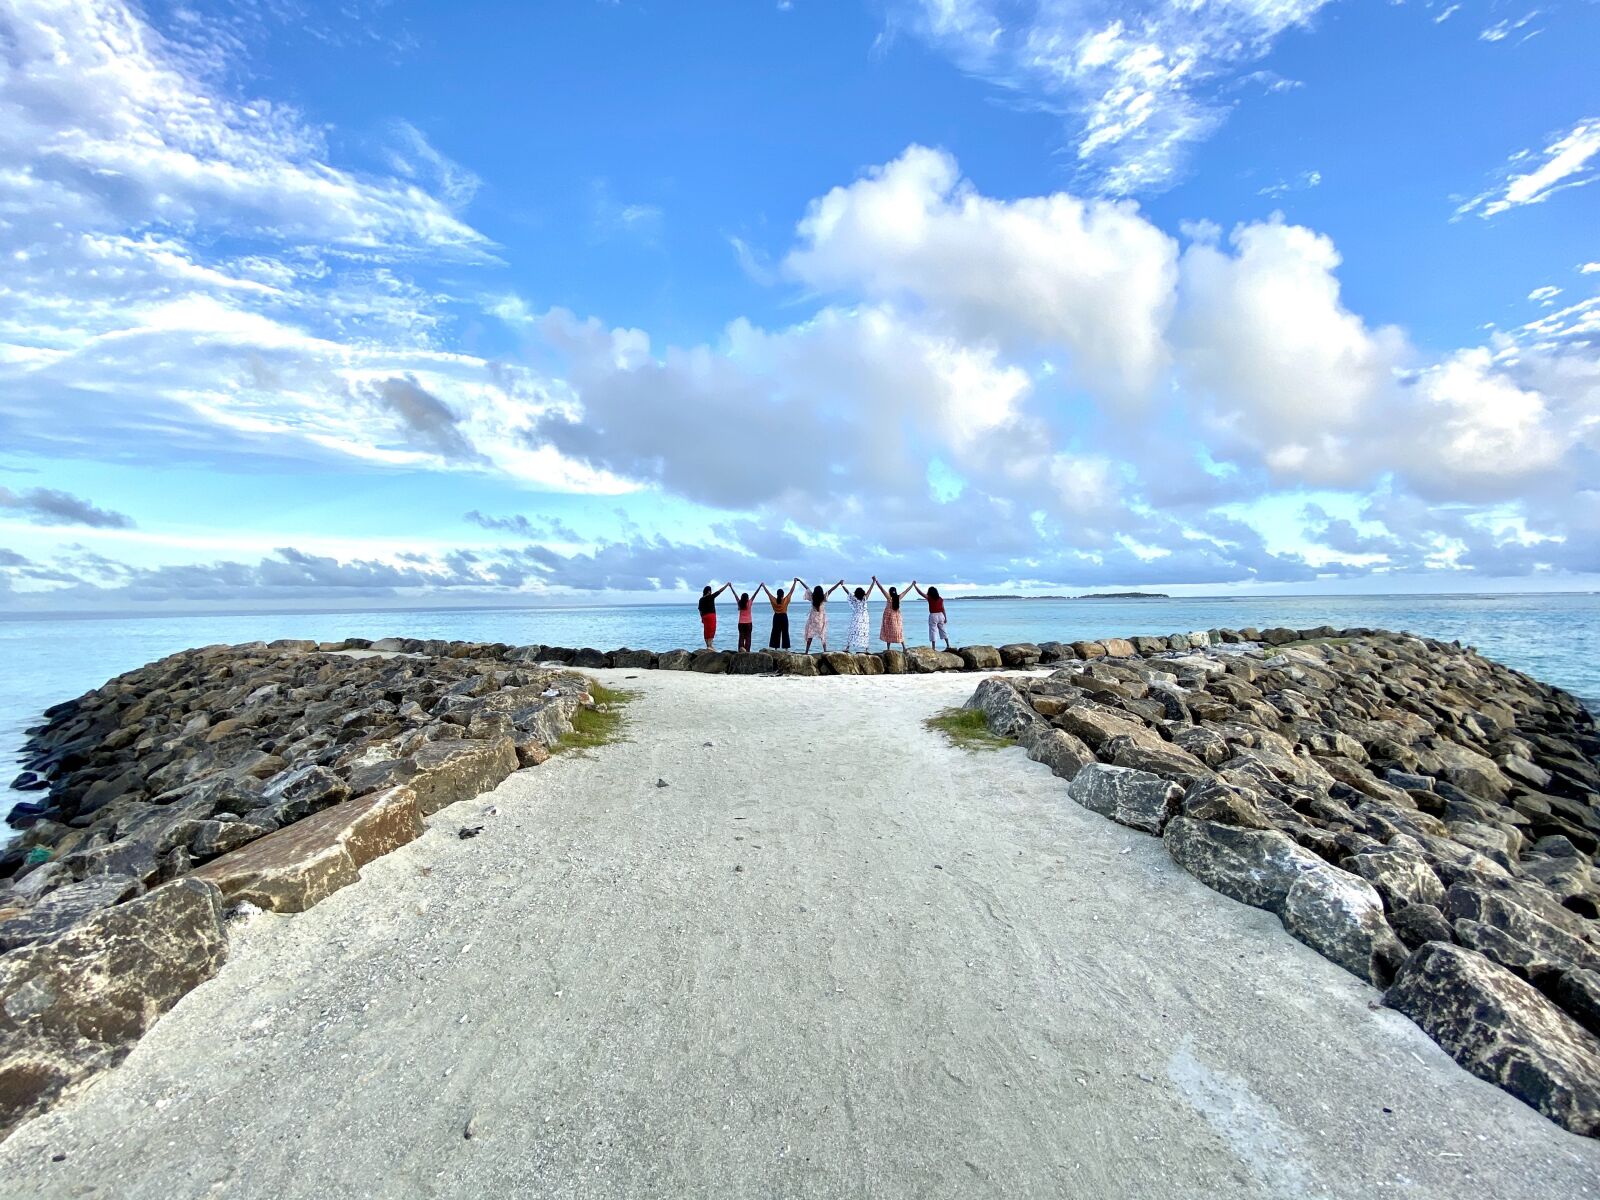 Apple iPhone 11 + iPhone 11 back dual wide camera 1.54mm f/2.4 sample photo. Maldives, island, travel photography